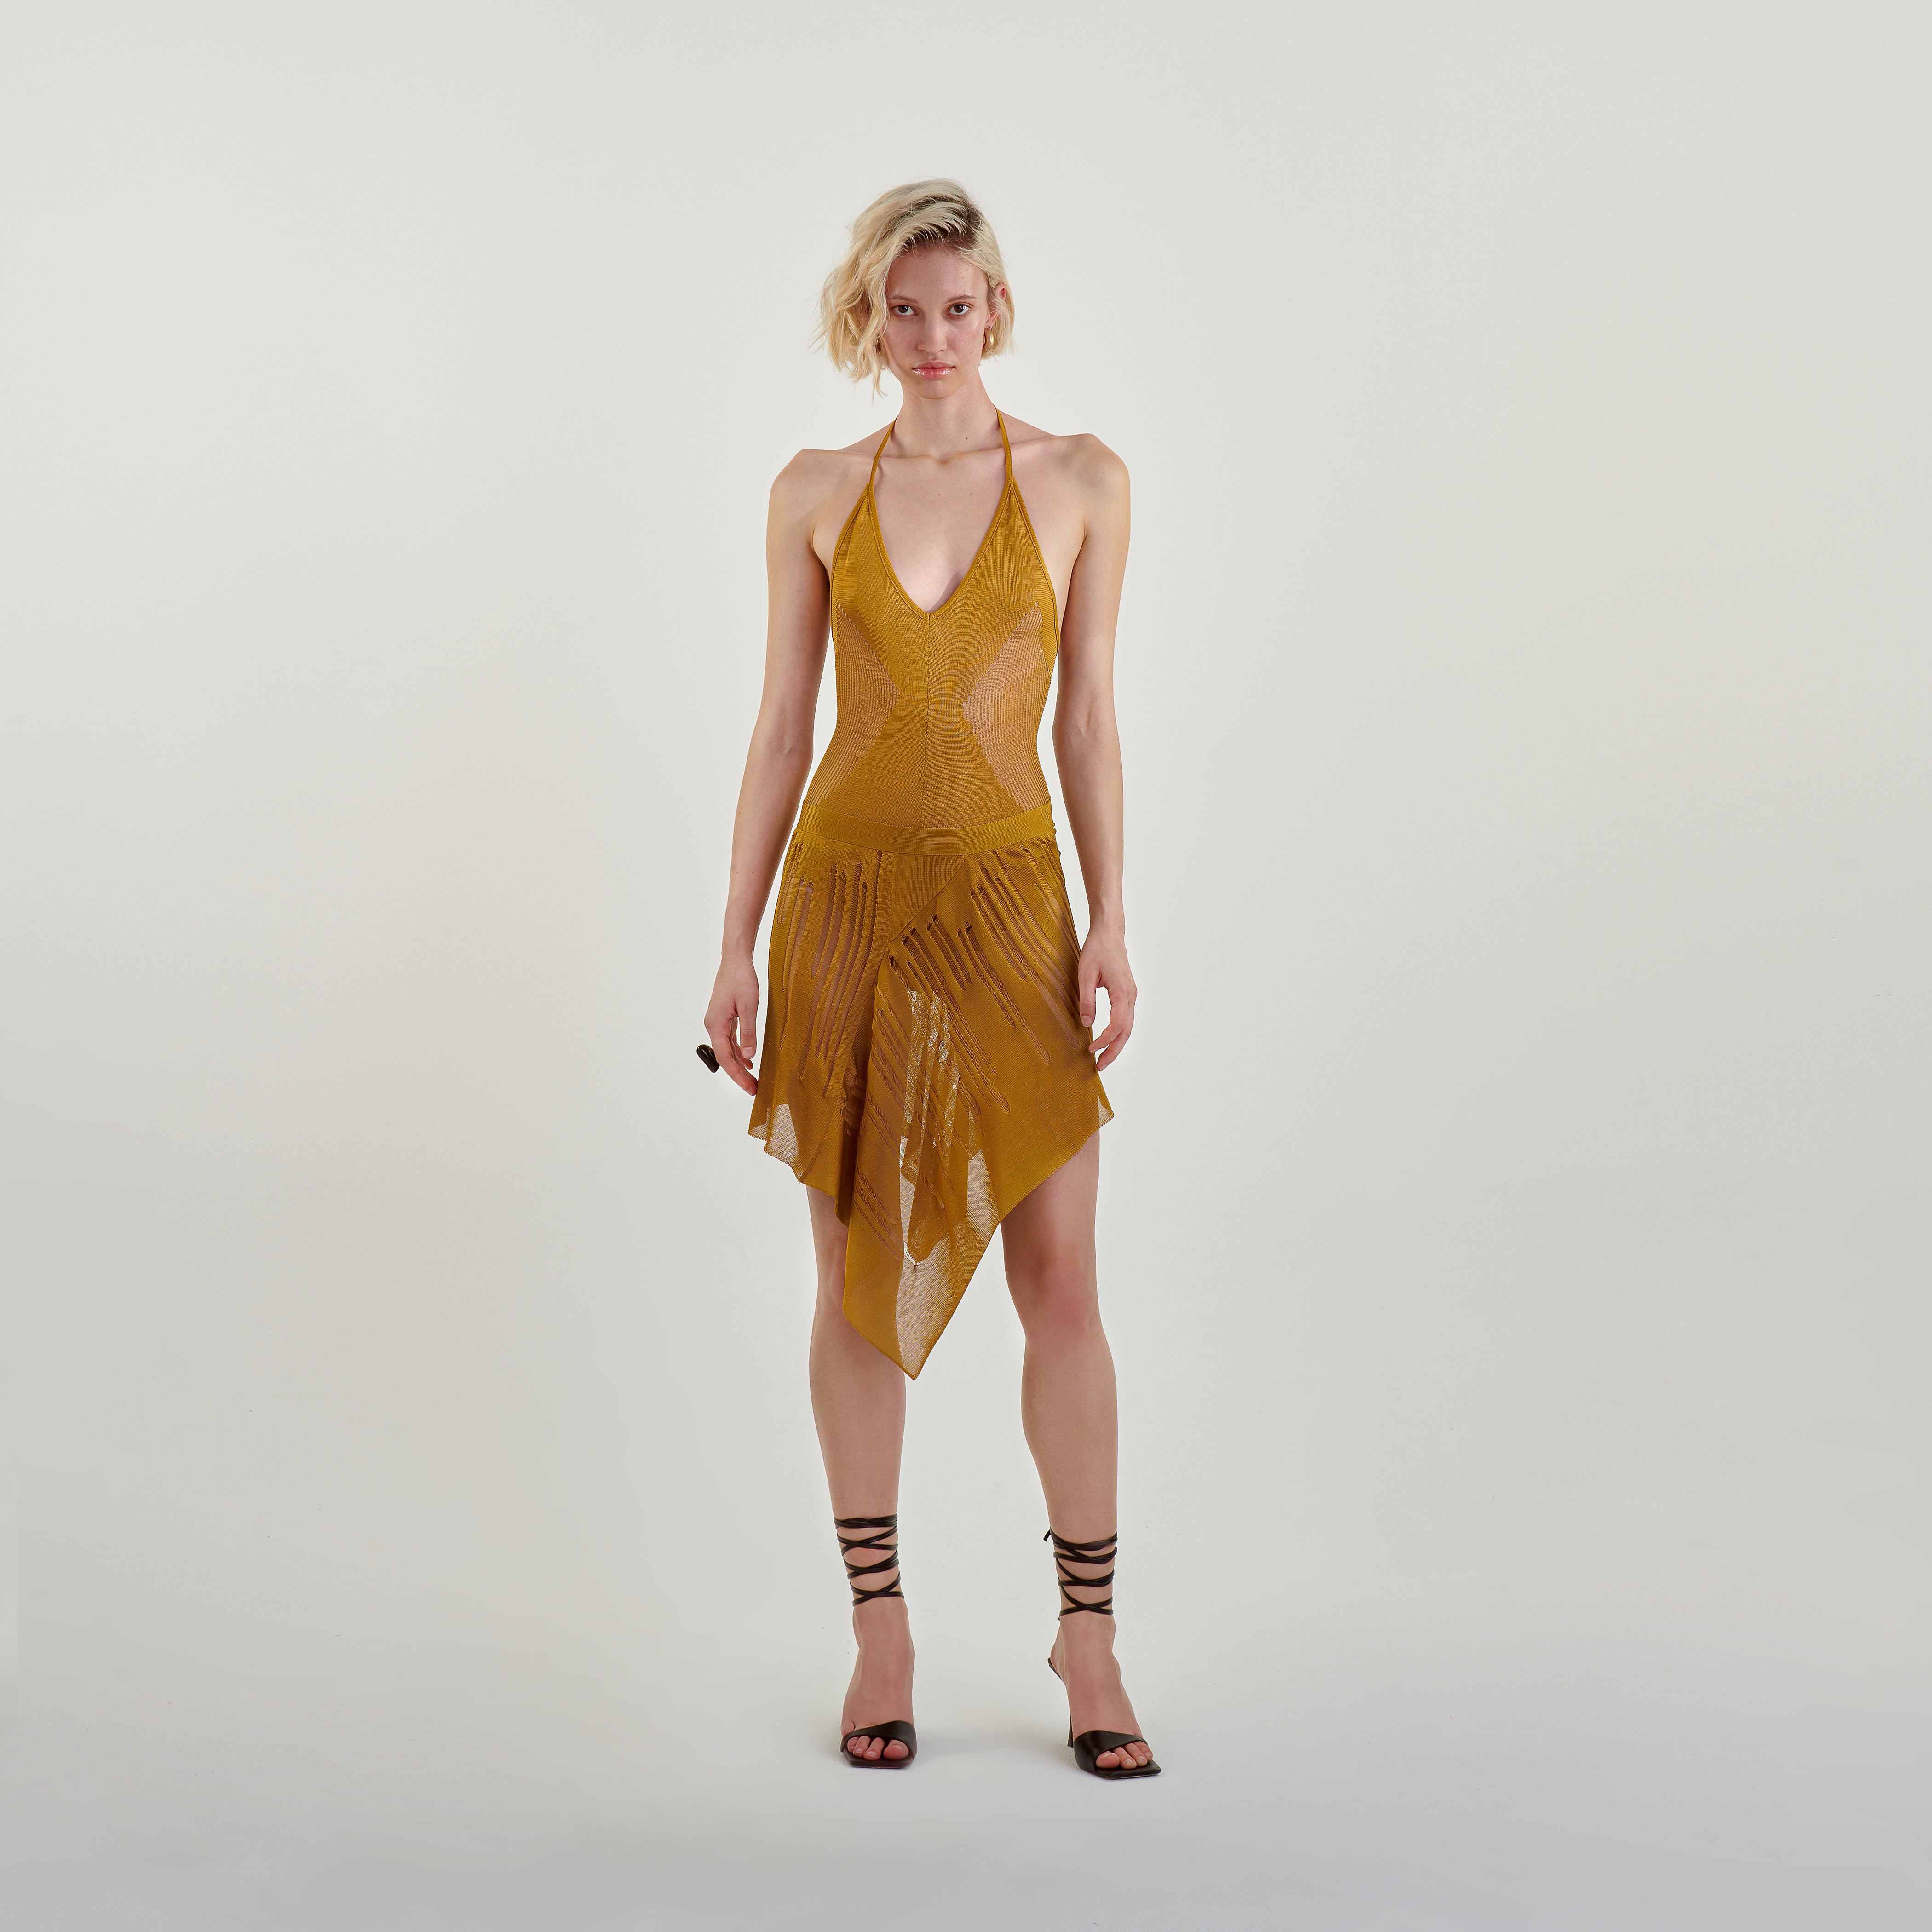 Cocoon Skirt in gold |Lara Chamandi